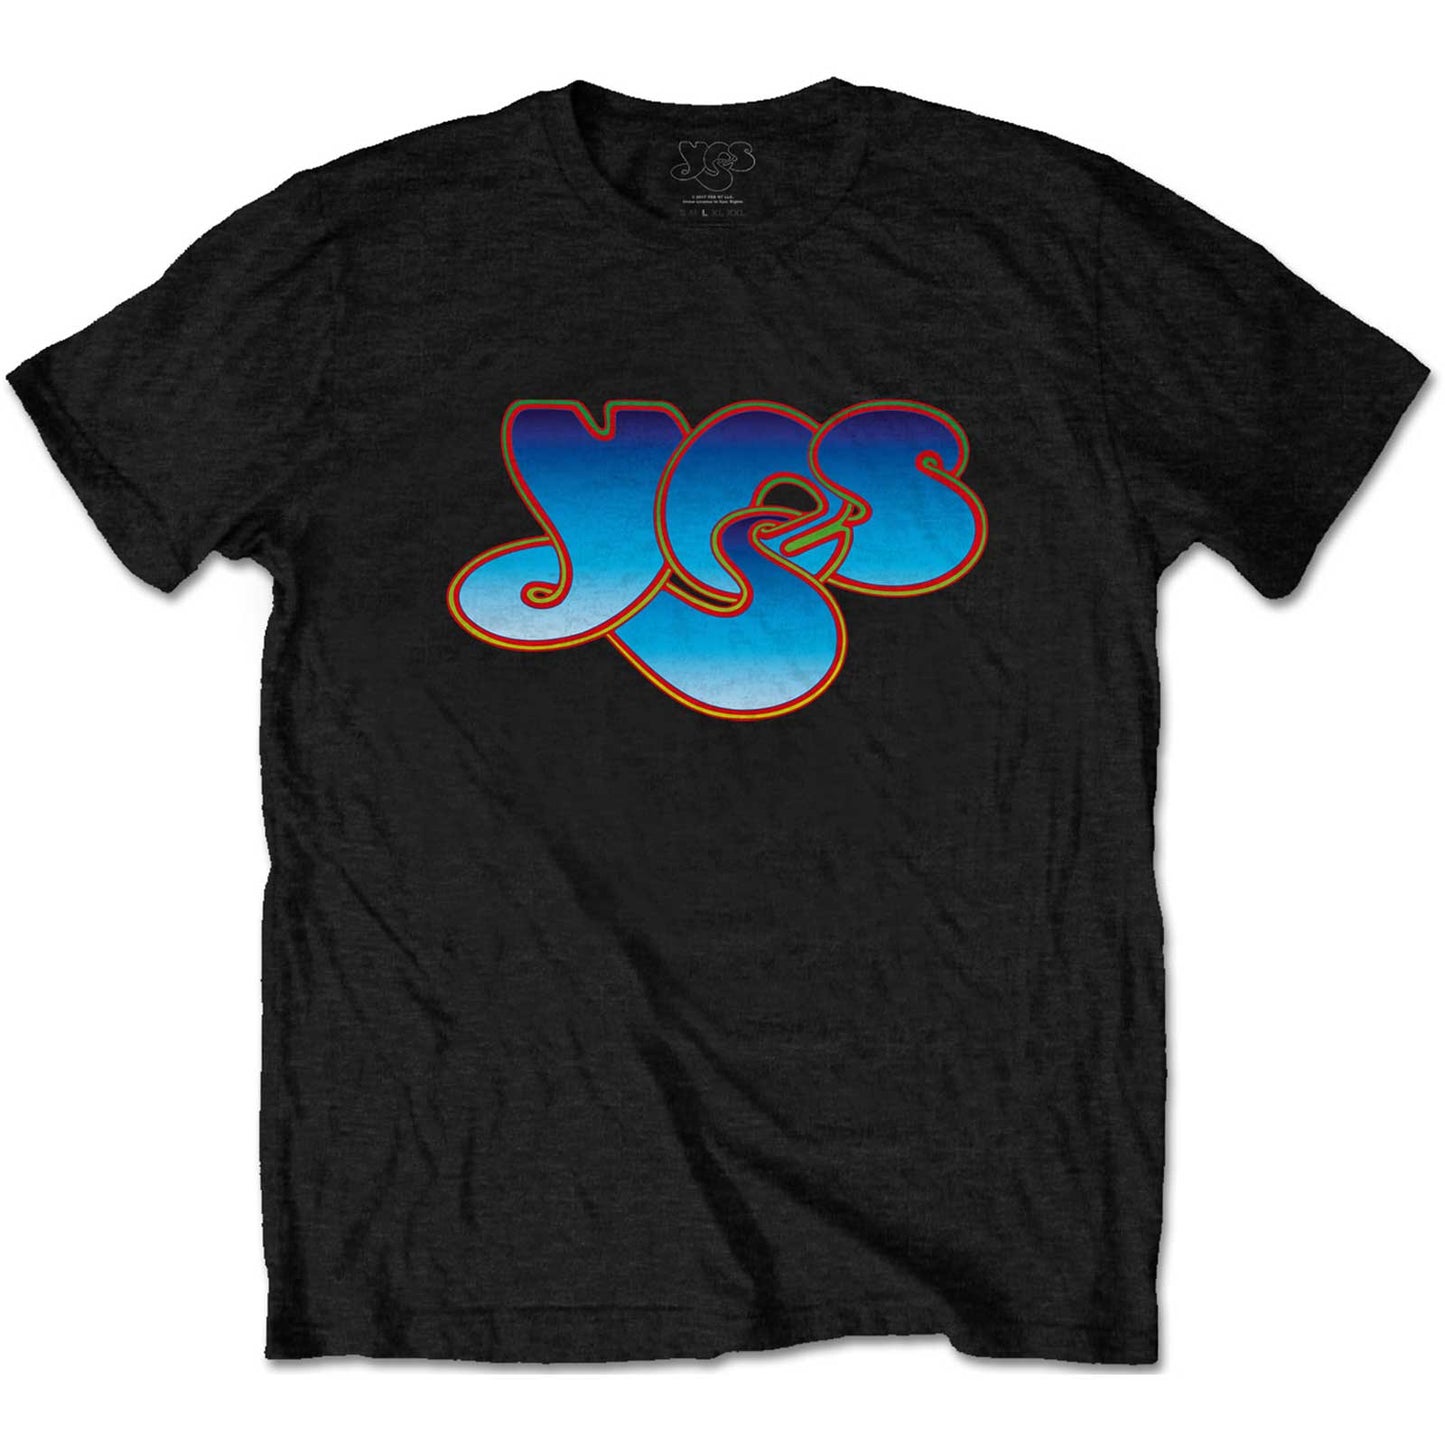 Yes T-Shirt: Classic Blue Logo